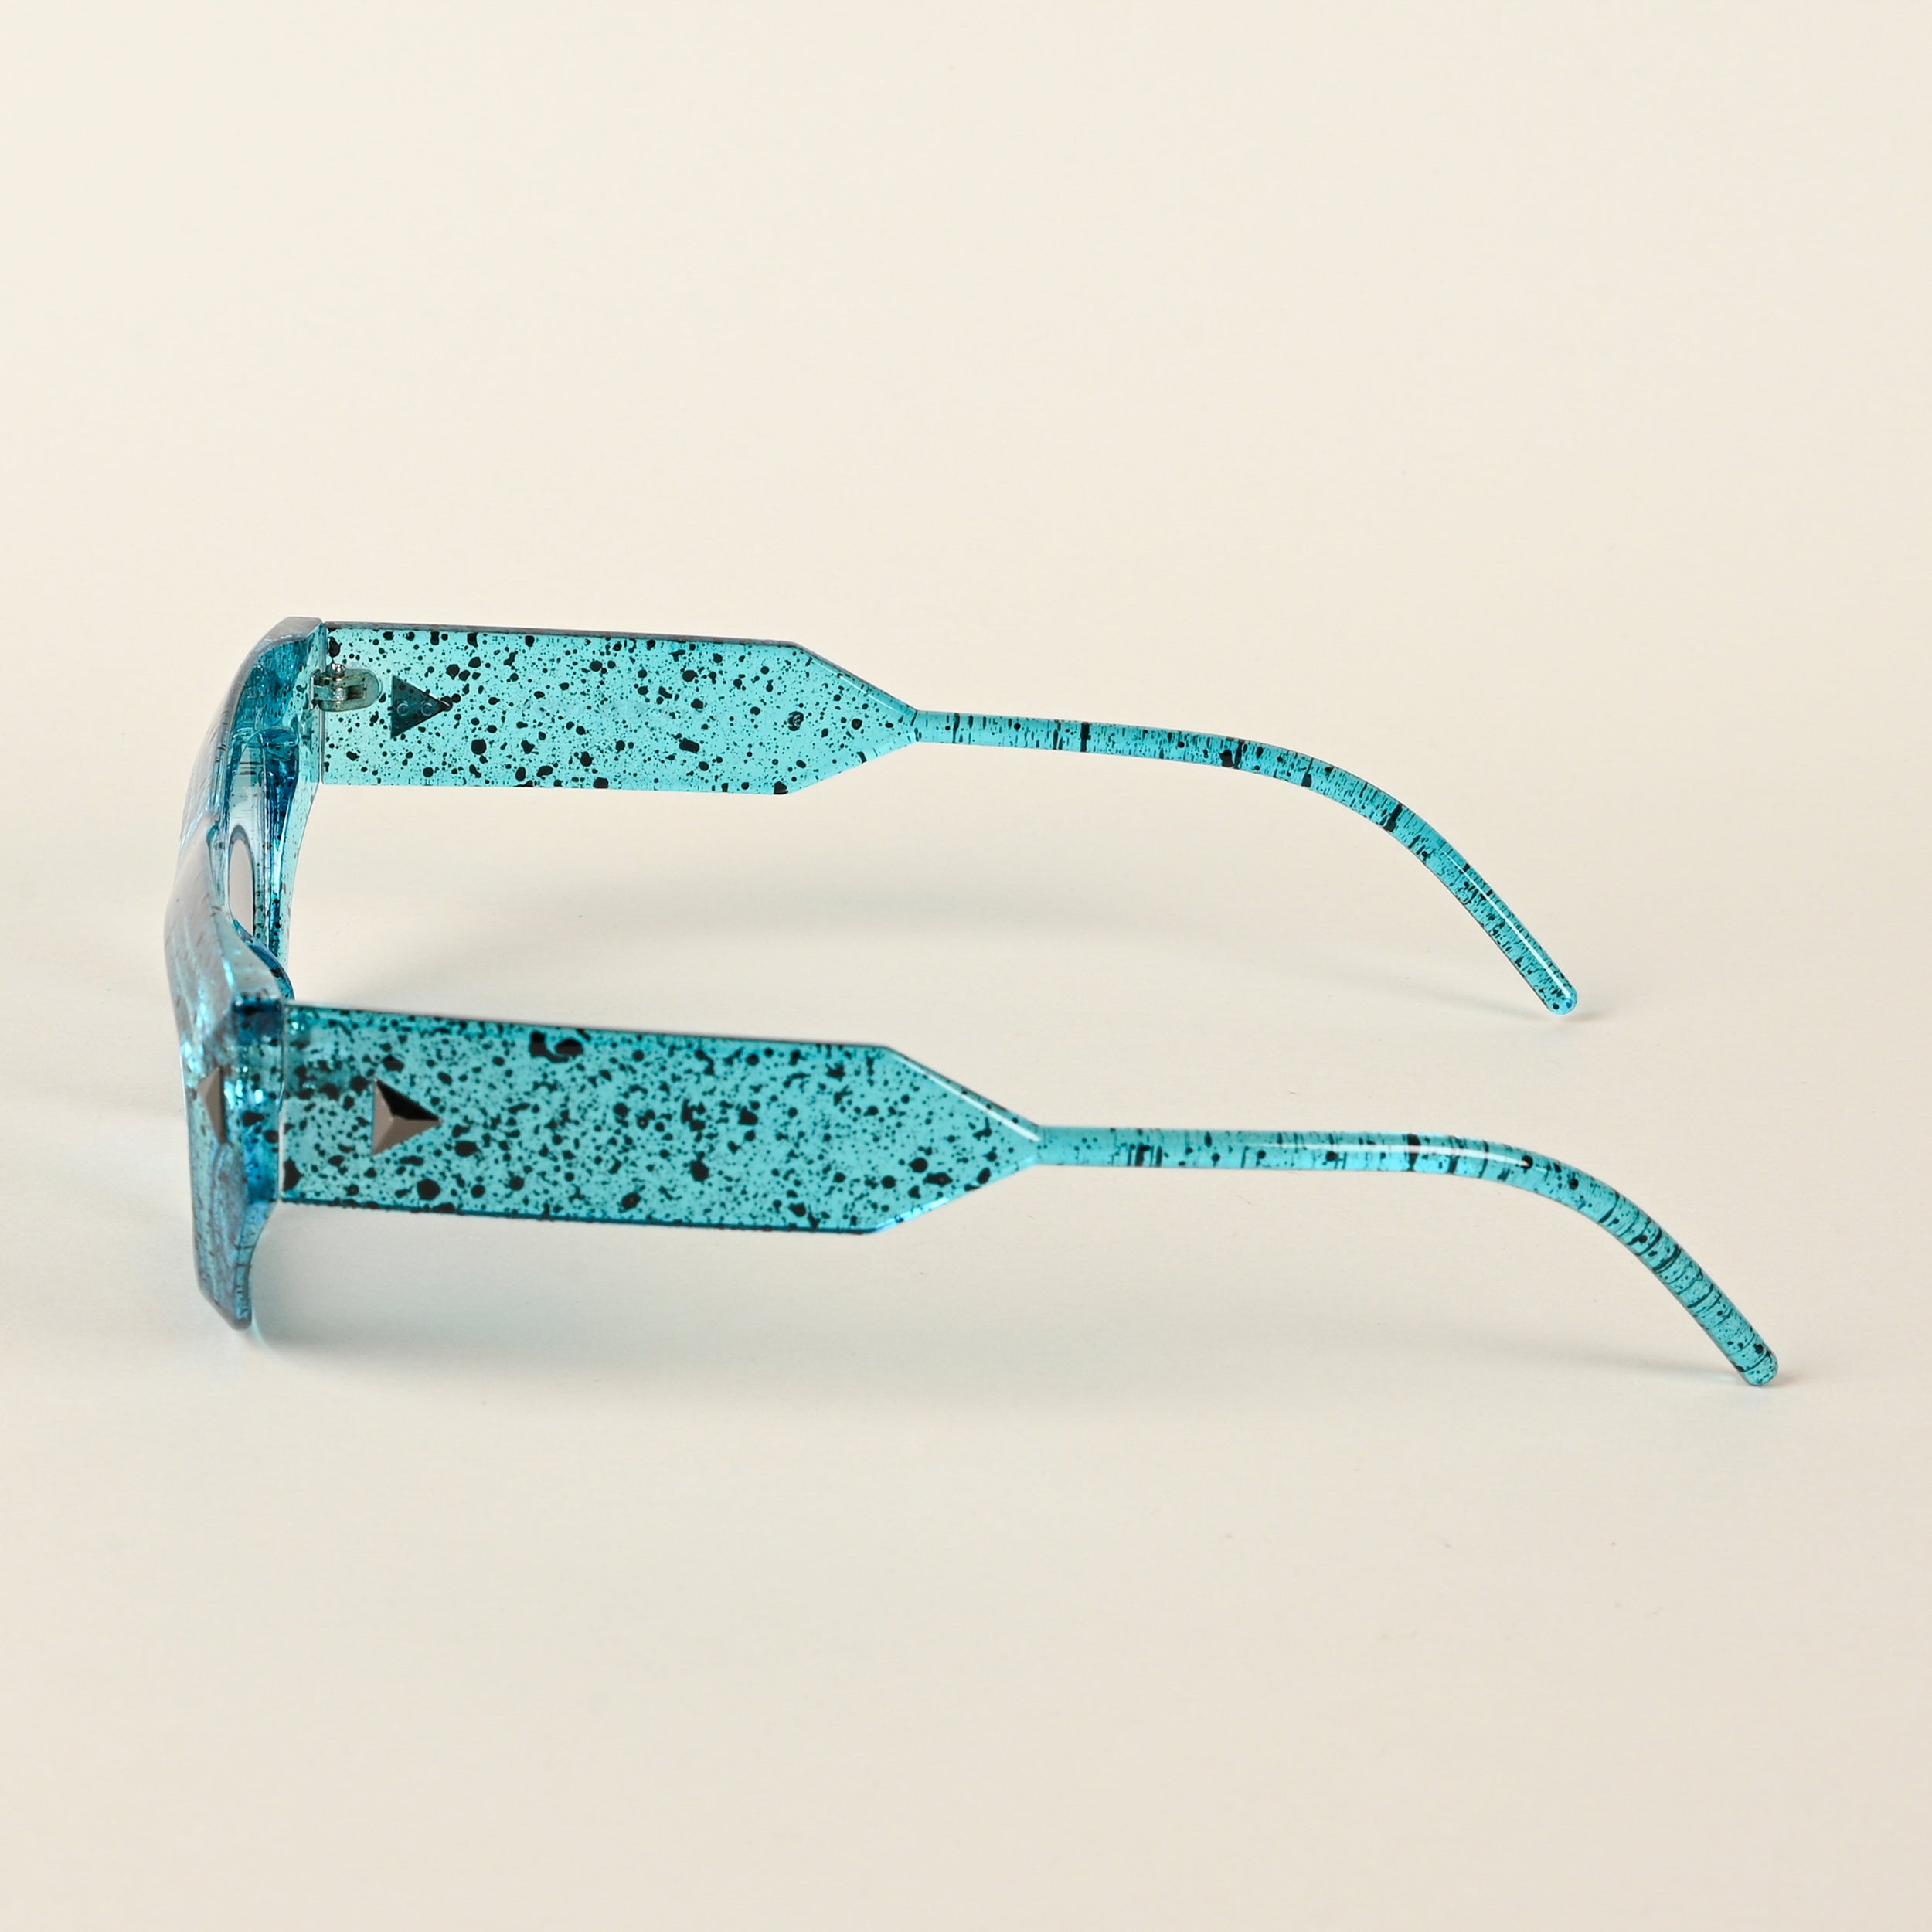 Voyage Grey Cateye Sunglasses for Women - MG4504